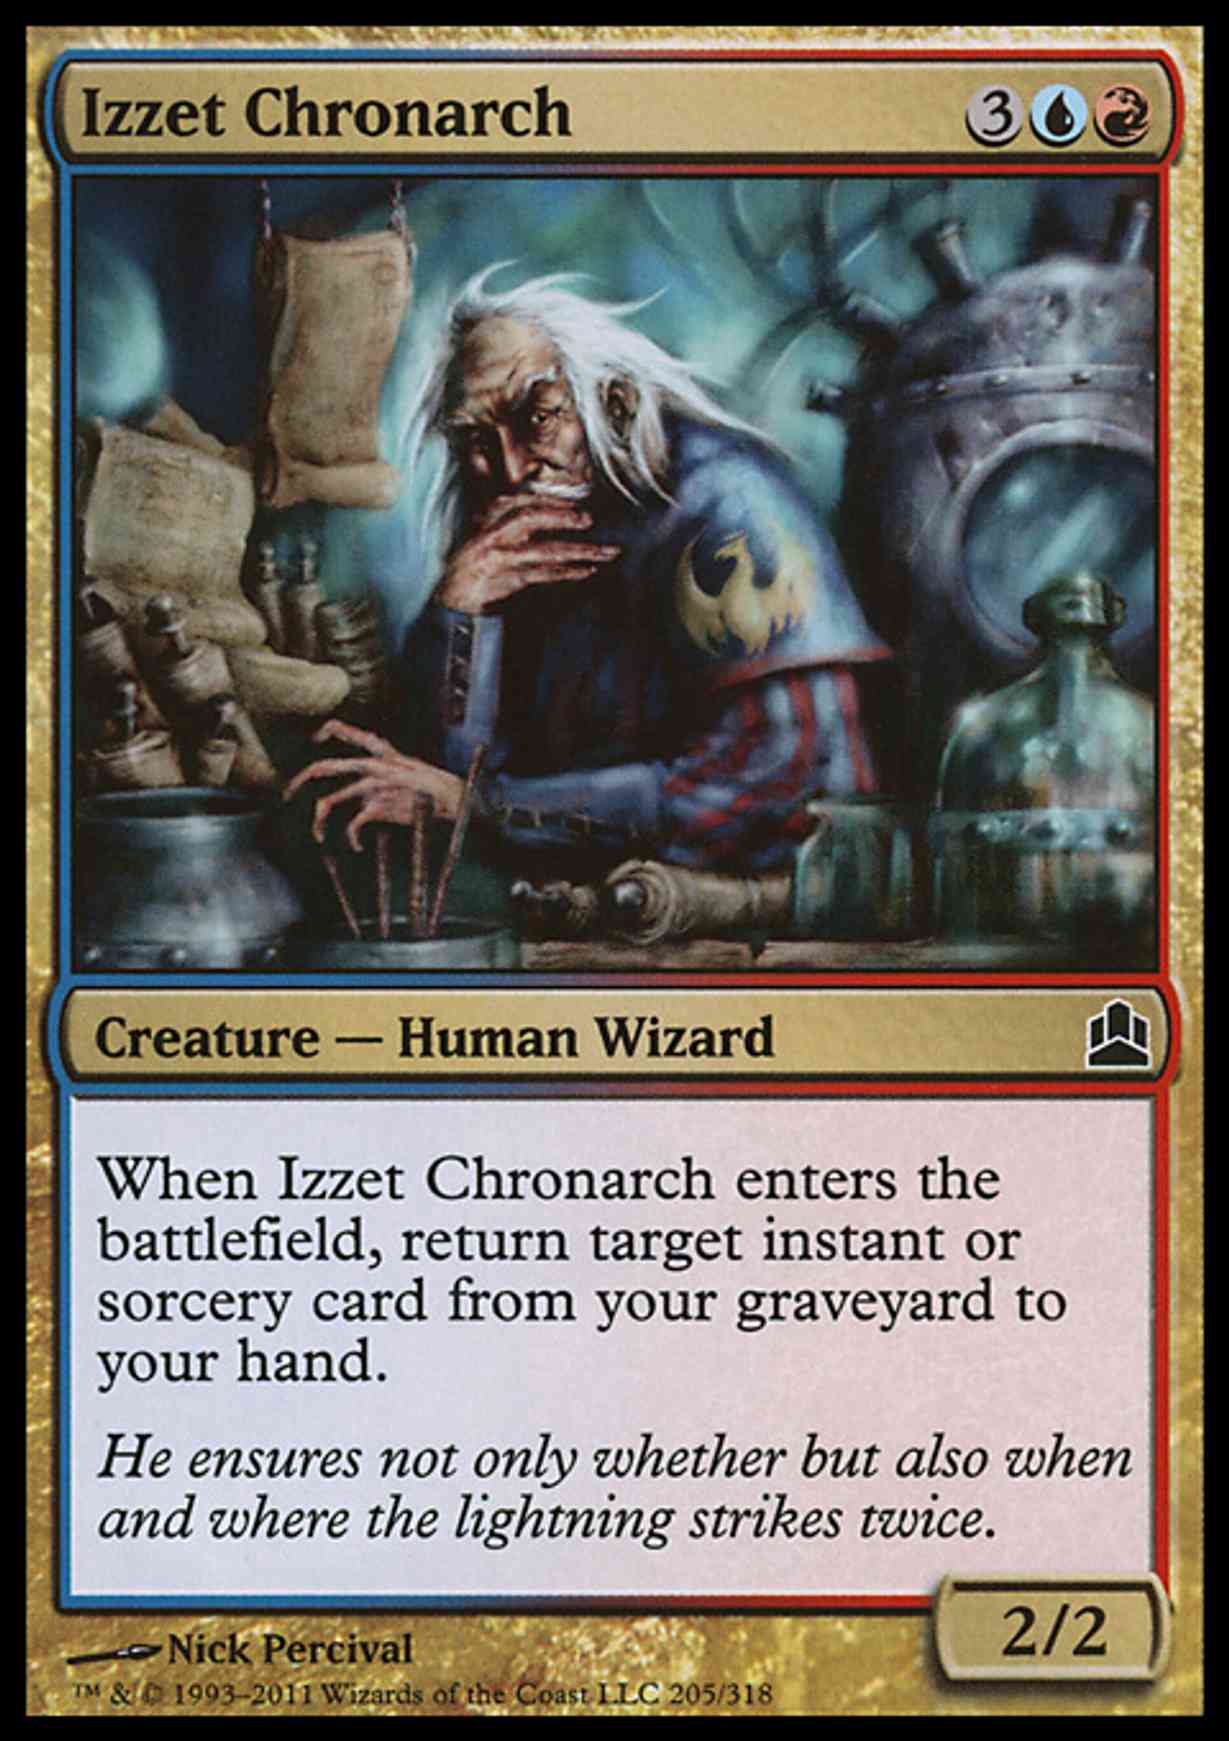 Izzet Chronarch magic card front